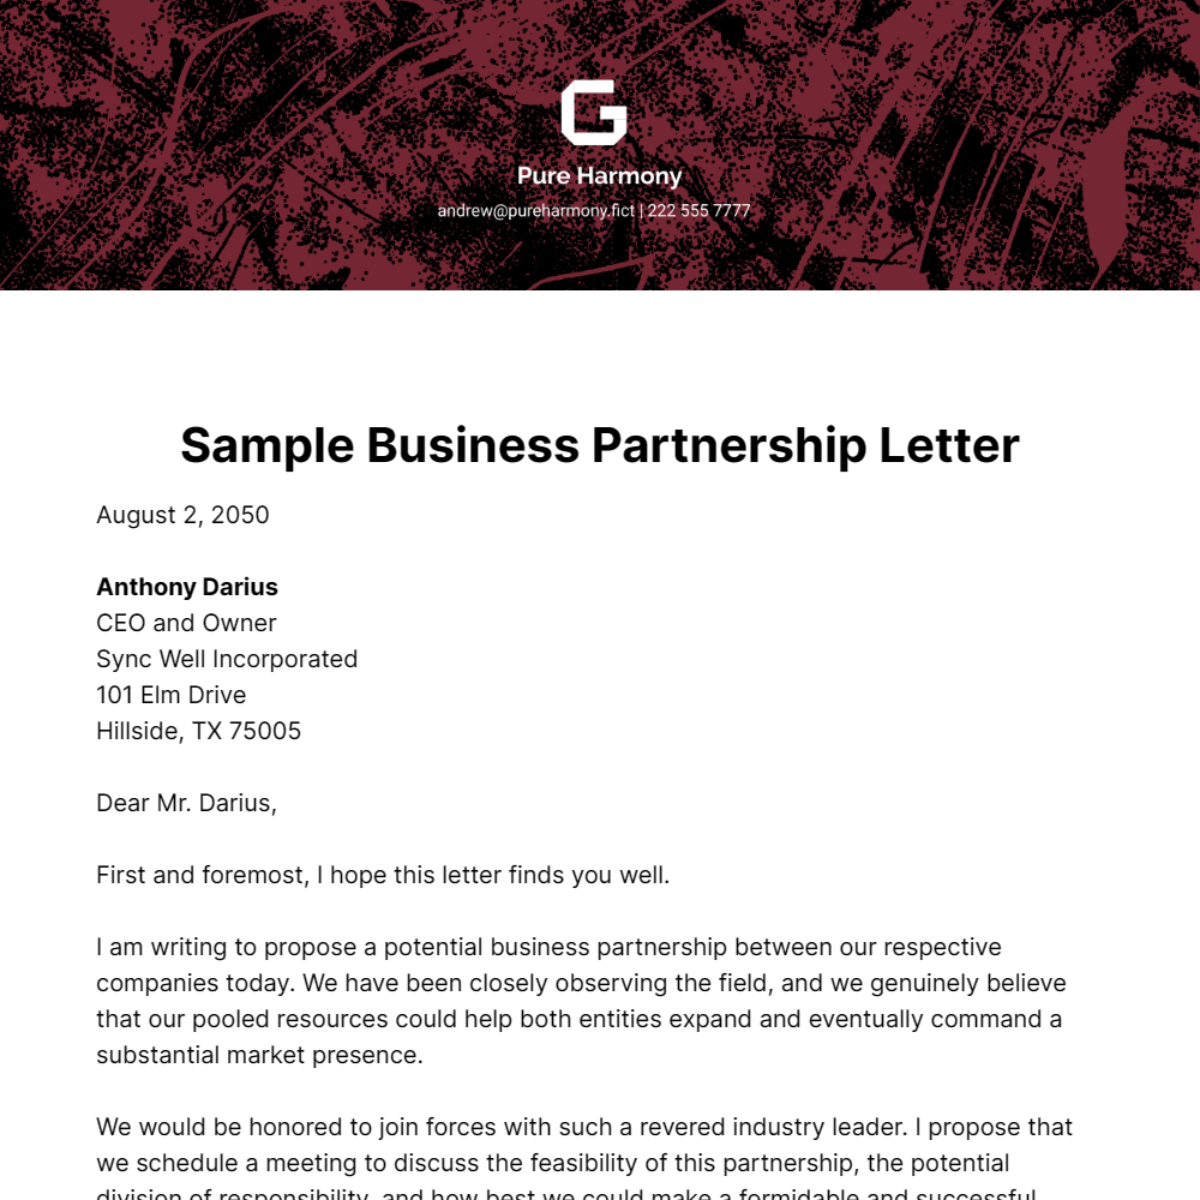 Sample Business Partnership Letter Template